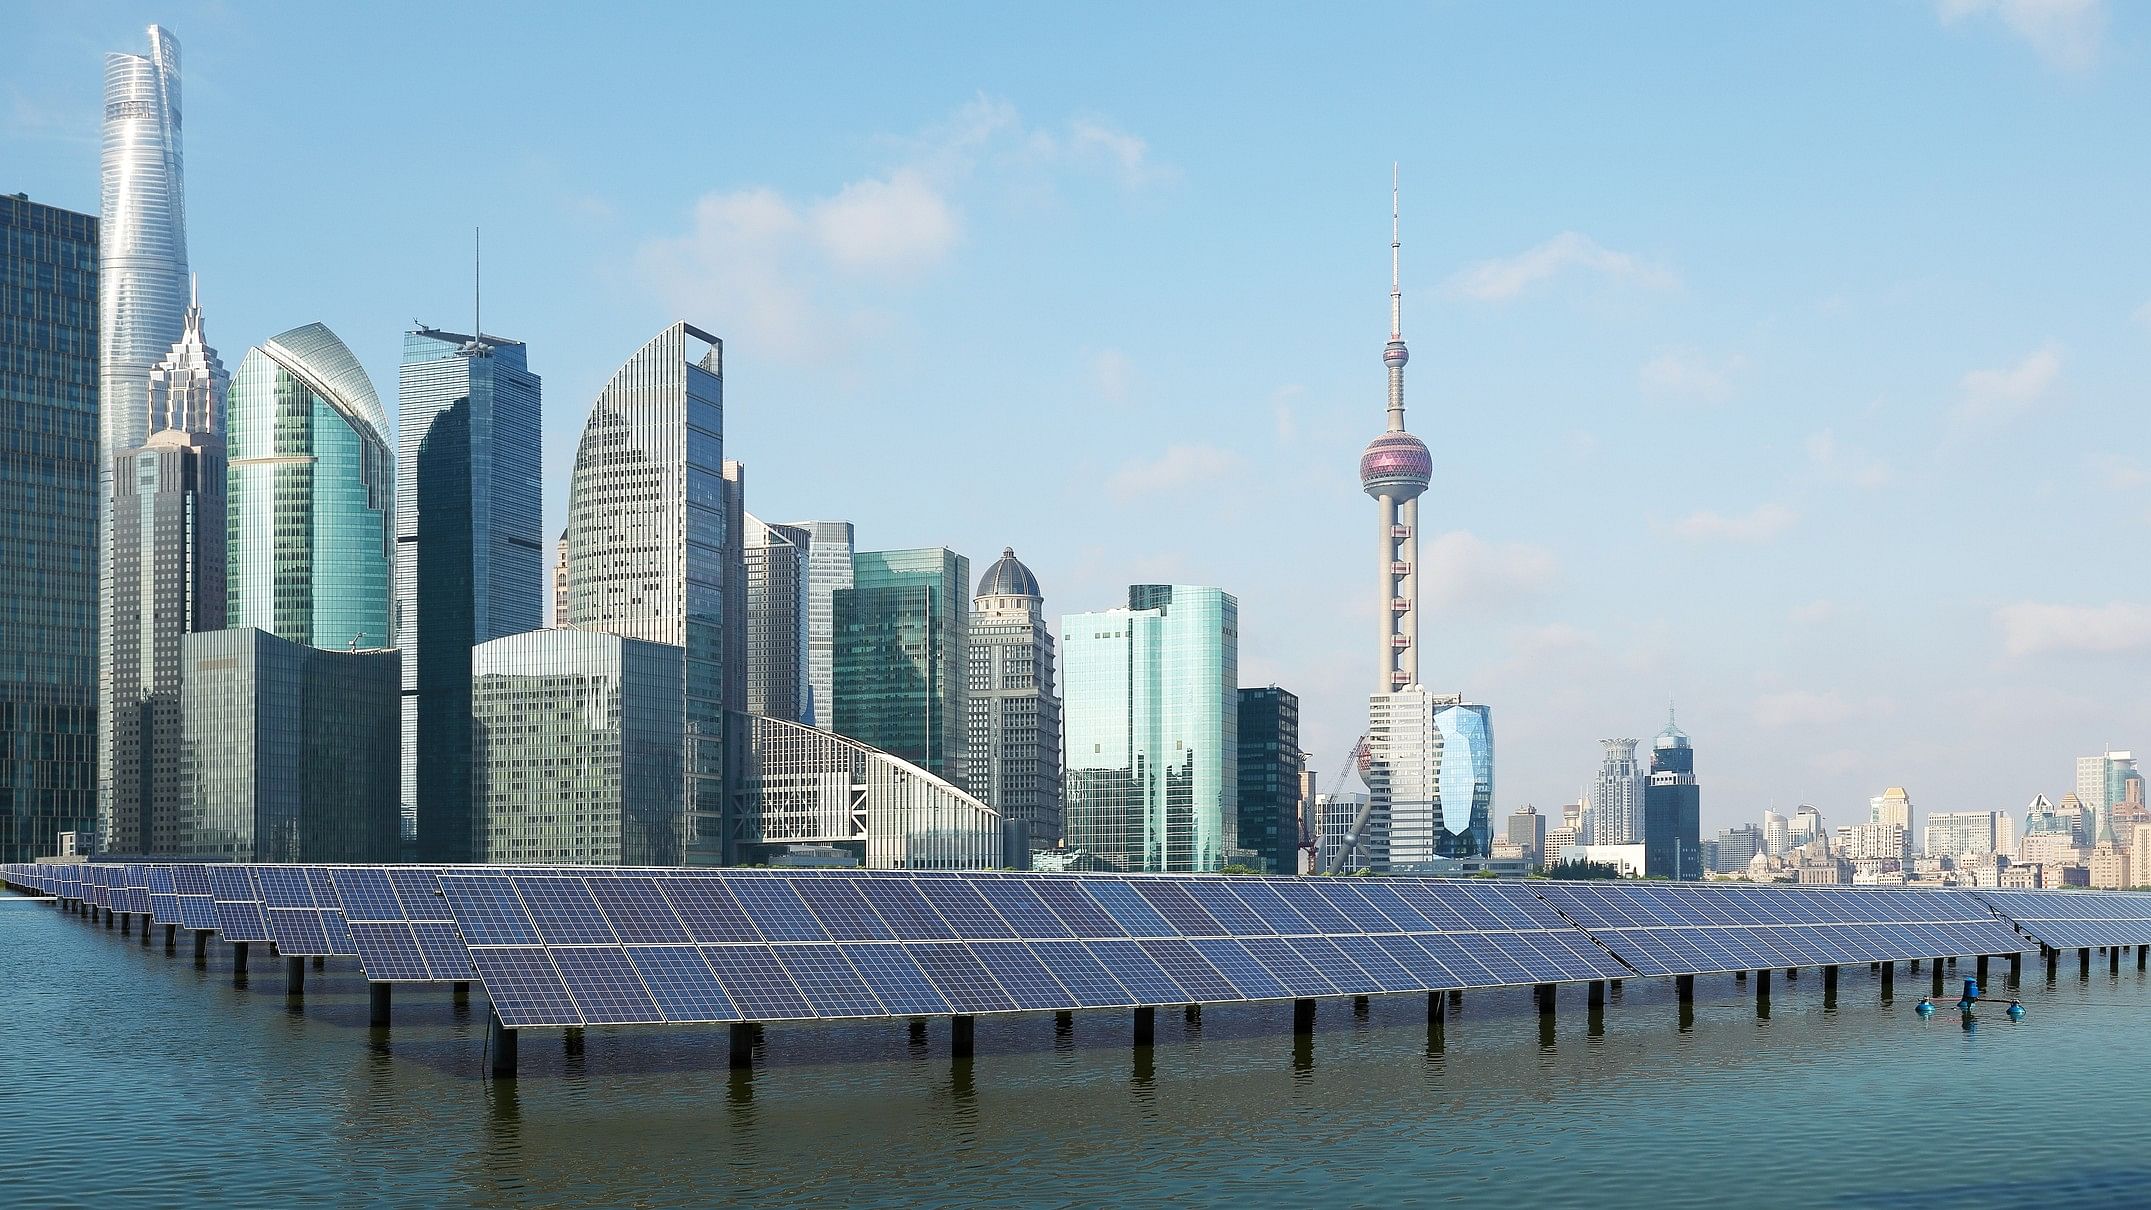 <div class="paragraphs"><p>Solar panels against the Shanghai skyline.</p></div>